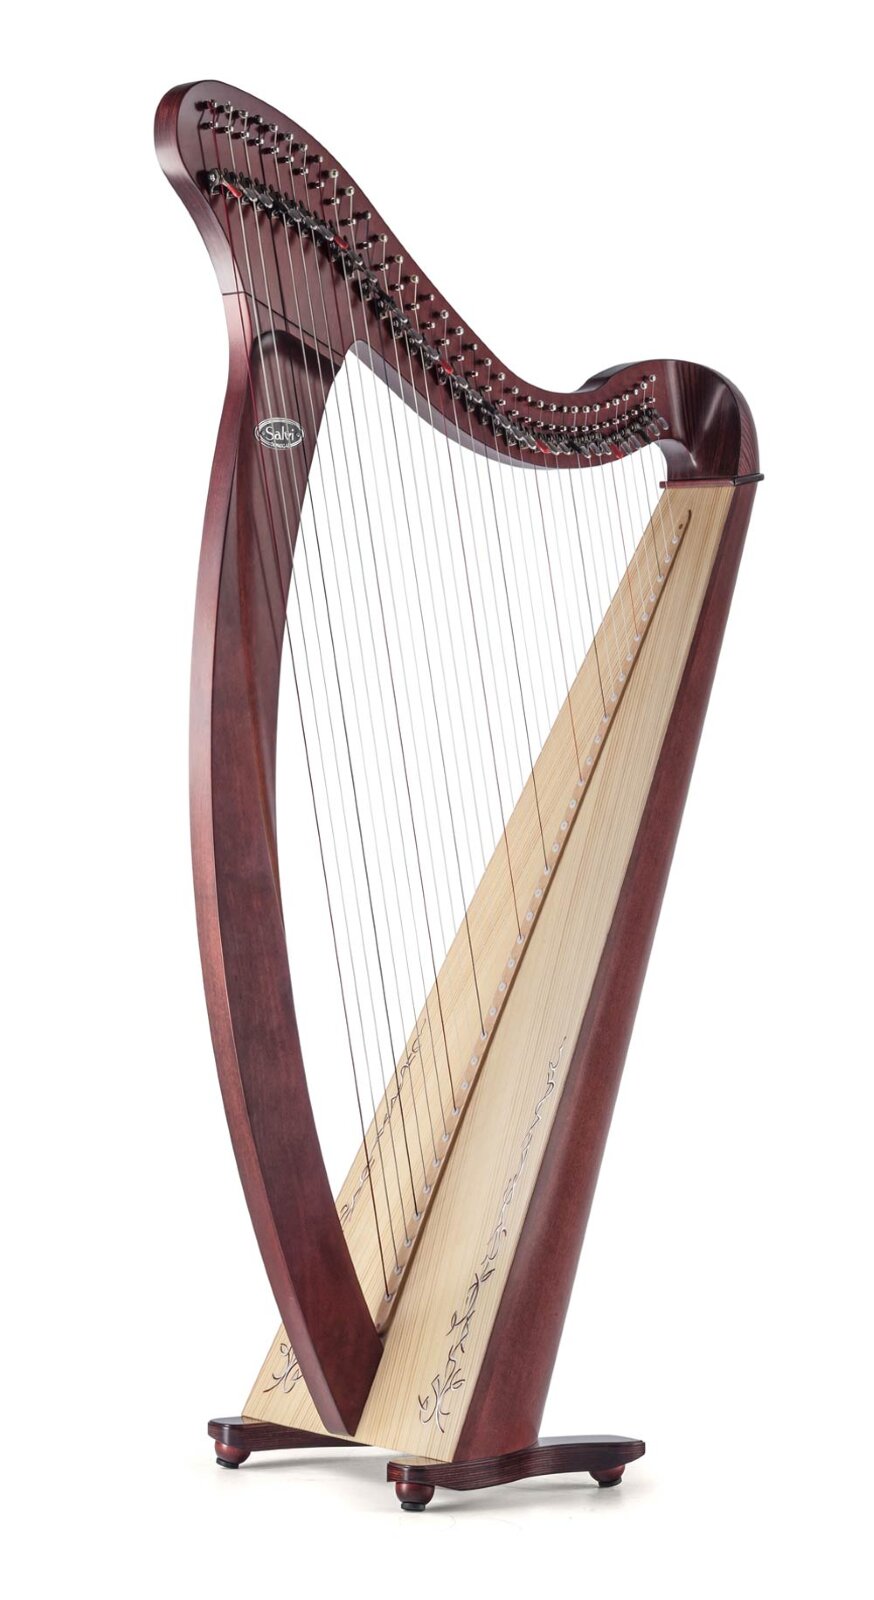 Salvi Donegal 34 gut mahogany strings : photo 1